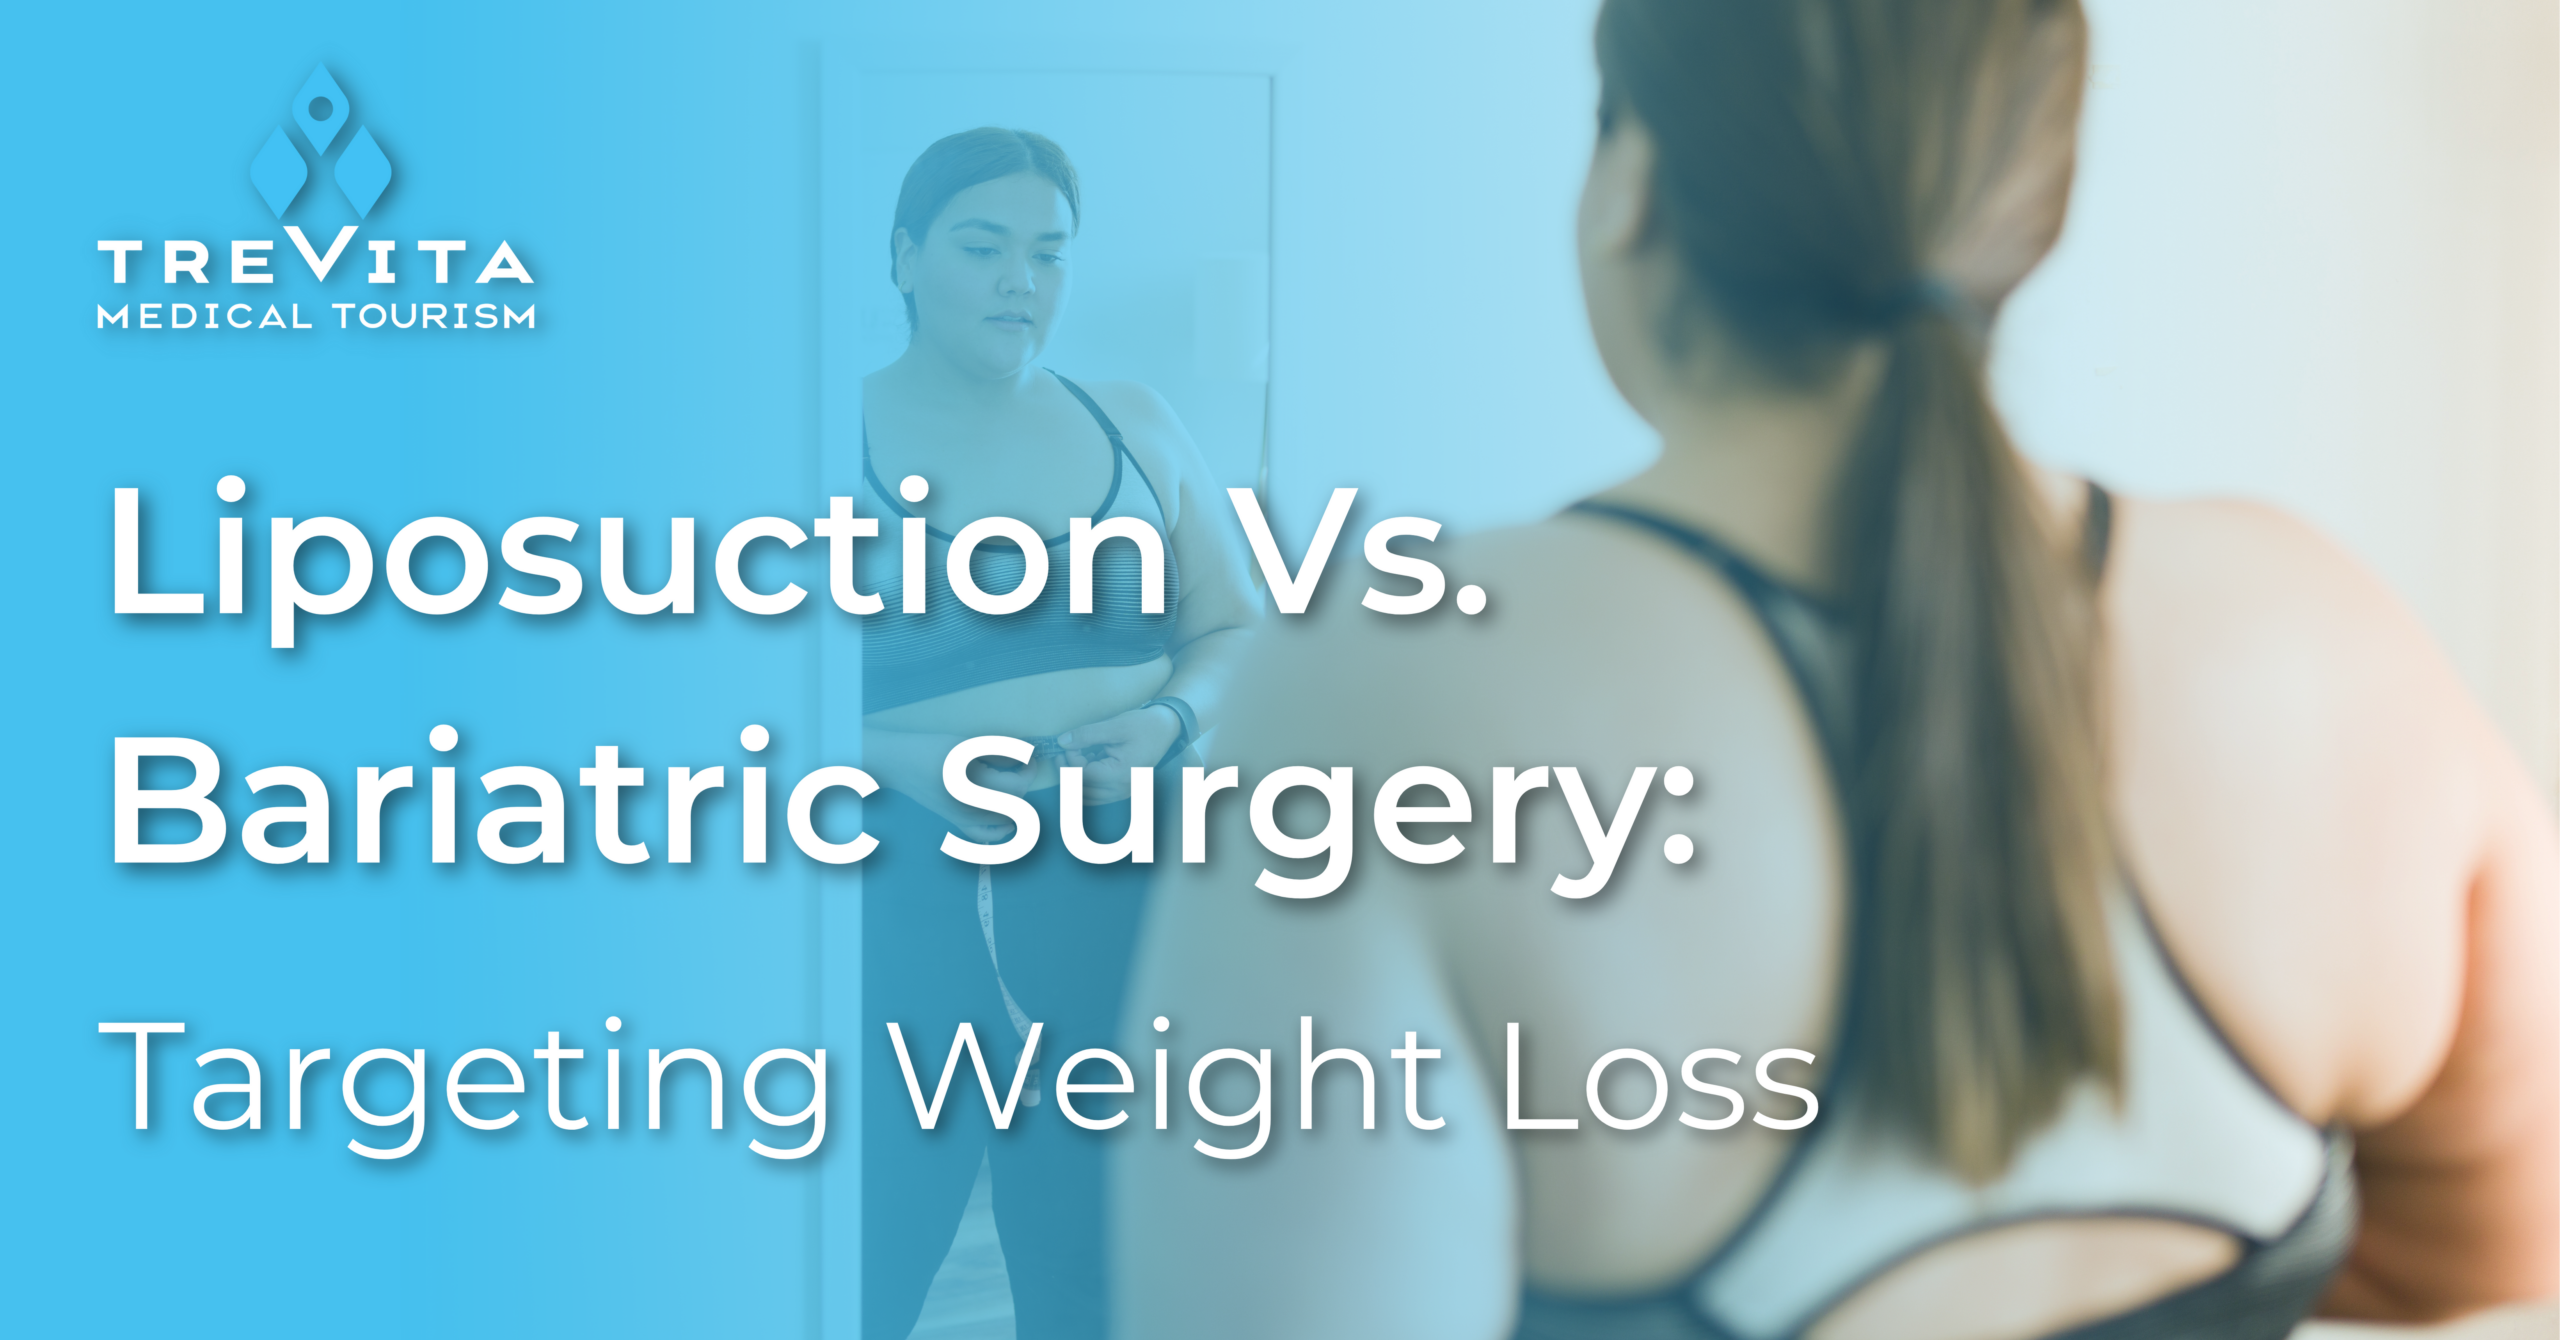 Liposuction vs. Bariatric Surgery